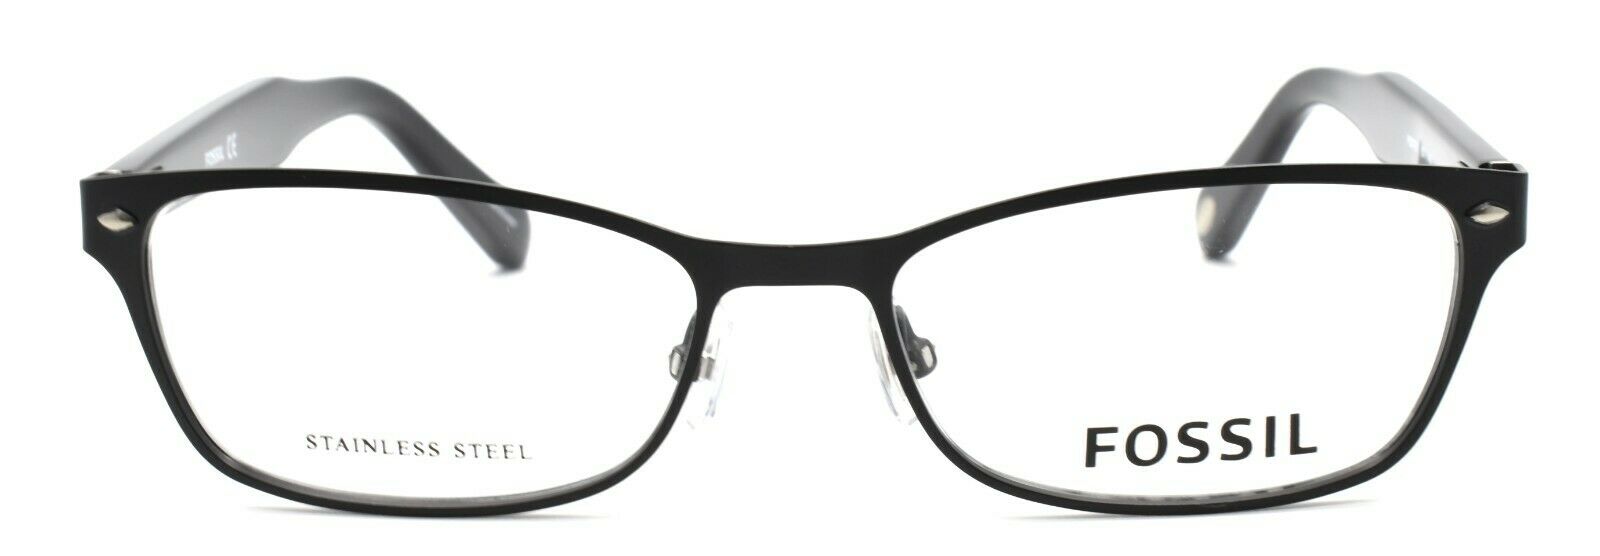 2-Fossil FOS 7001 807 Women's Eyeglasses Frames 51-16-140 Black + CASE-762753992123-IKSpecs